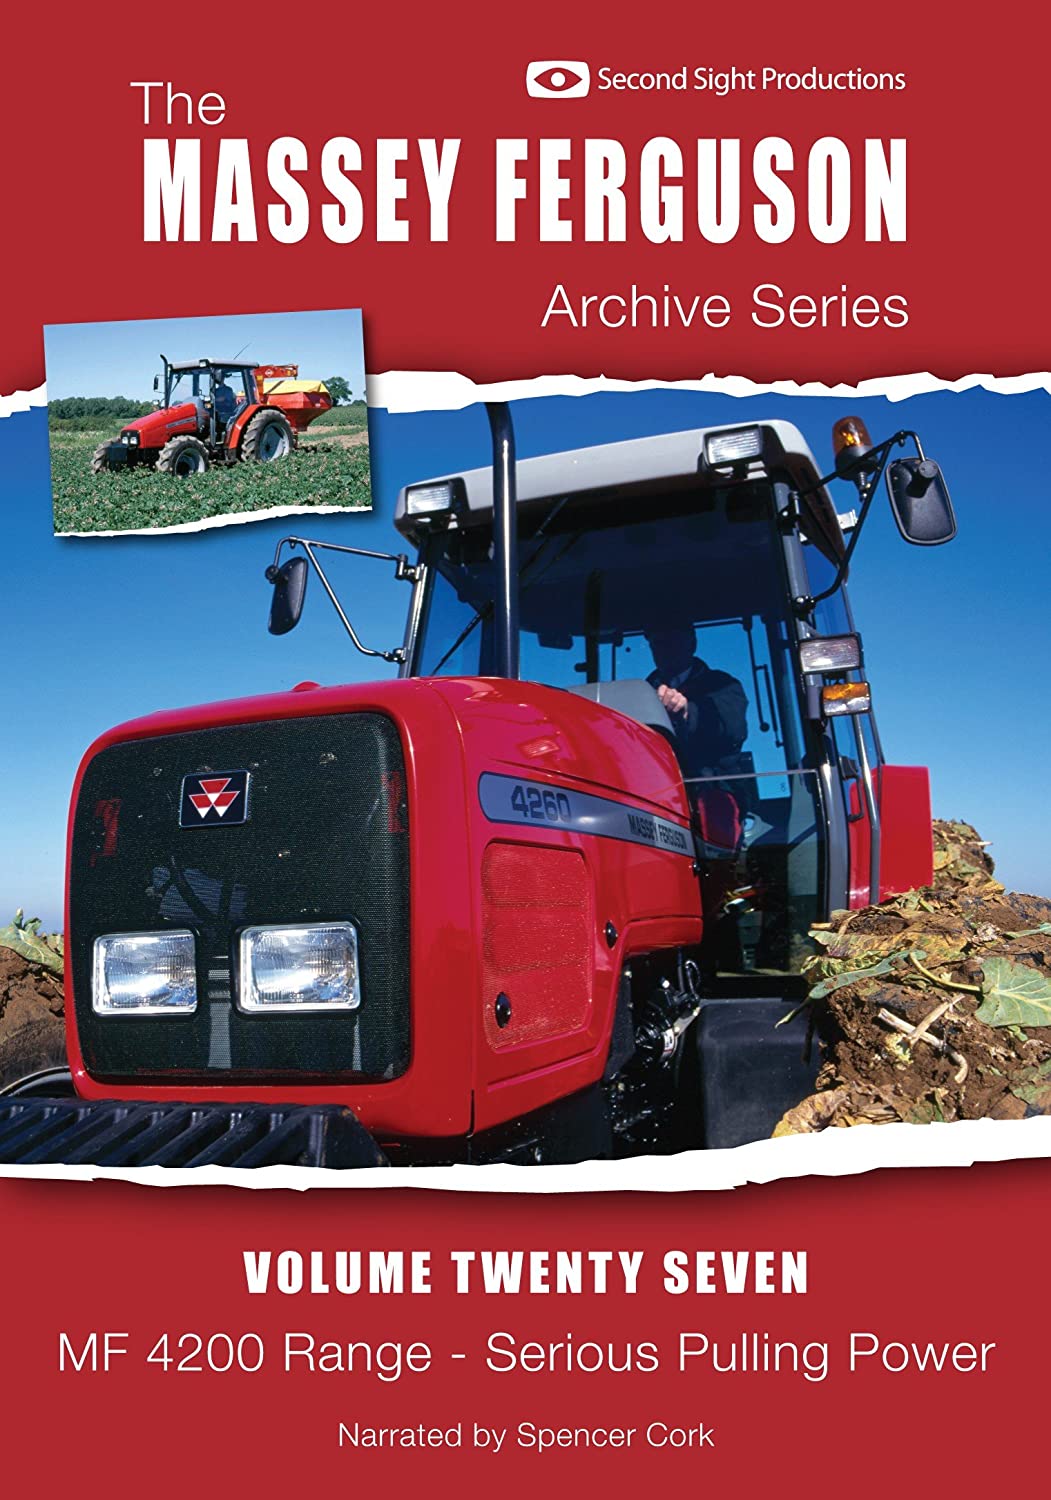 The Massey Ferguson Archive Series Vol. 27: MF 4200 Range - Serious Pulling Power